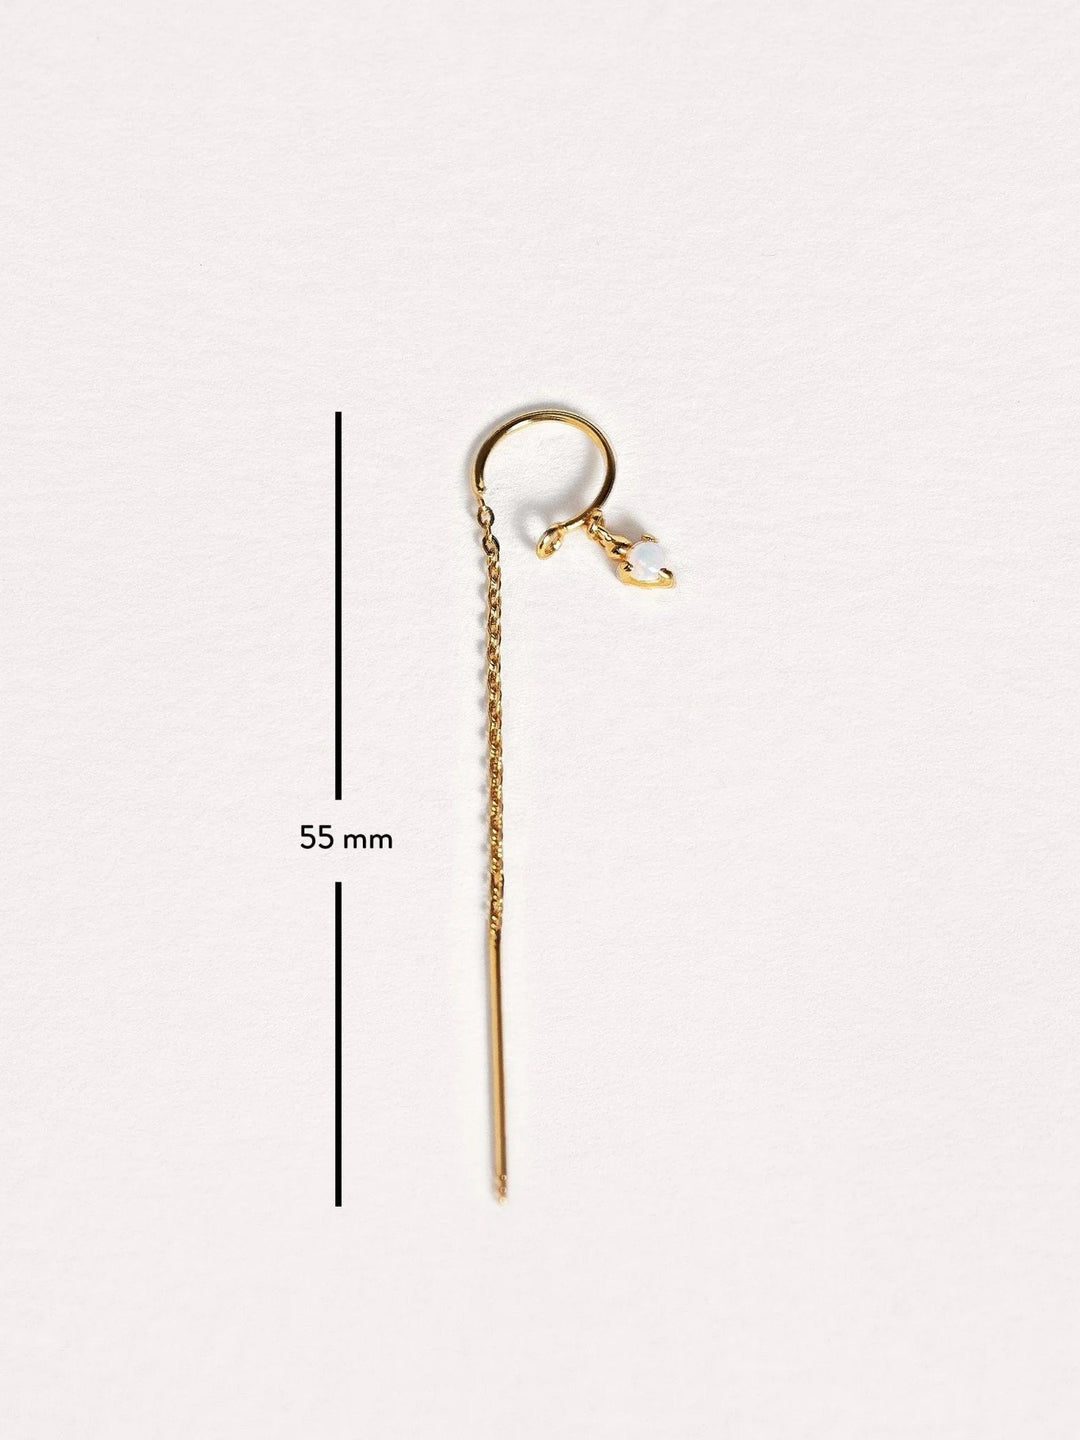 Ulfa Silver Droplet Ear Threader Earrings - 24K Gold PlatedMoonstone 55 mmanti tarnish jewelrychain drop earringsLunai Jewelry